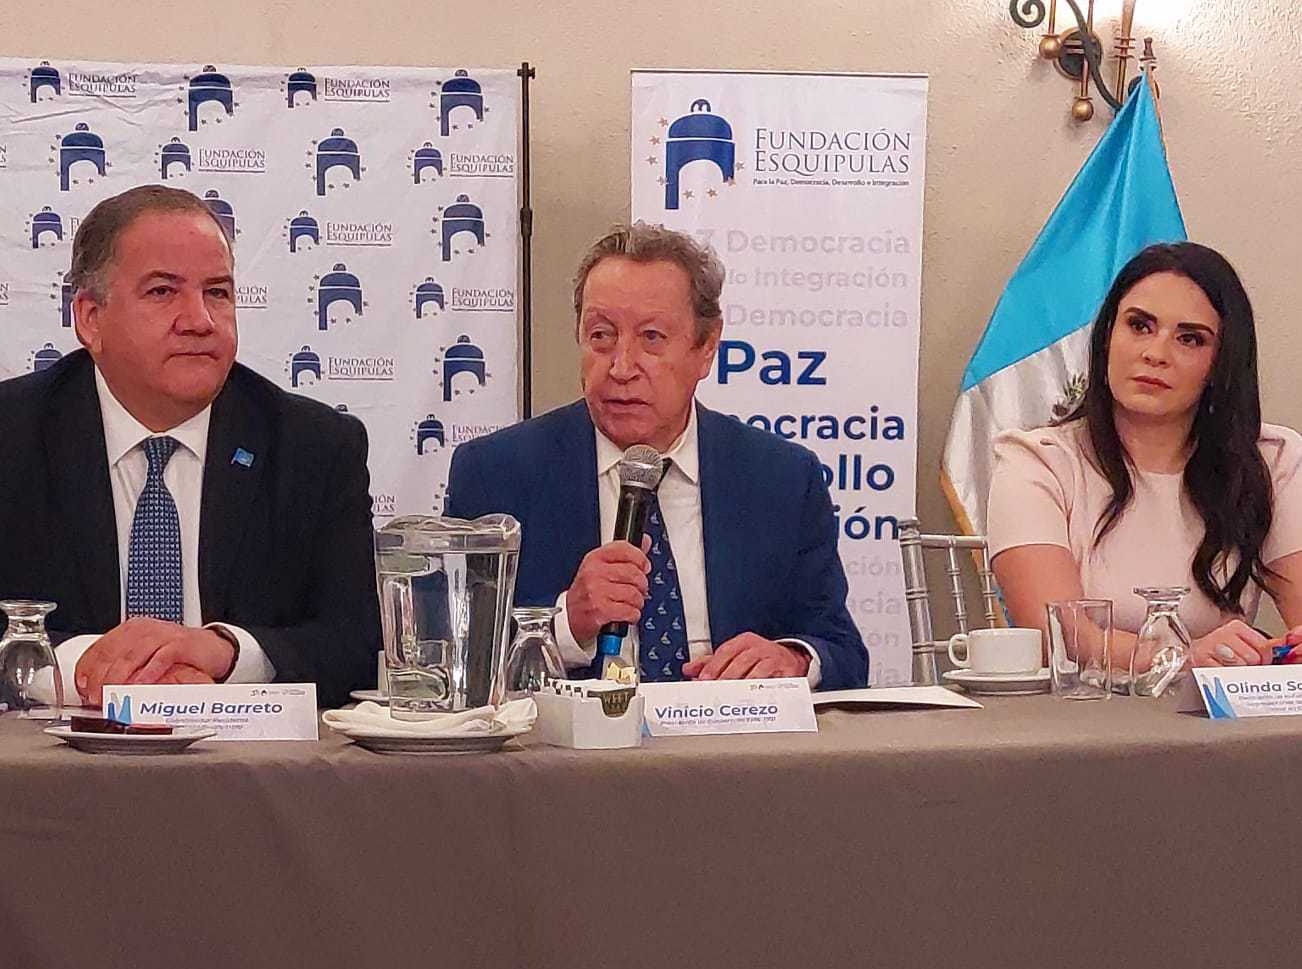 From left to right in the photo: Miguel Barreto, Resident Coordinator of UN Guatemala; Vinicio Cerezo, Former President of Guatemala; and Olinda Salguero, President of the Esquipulas Foundation.